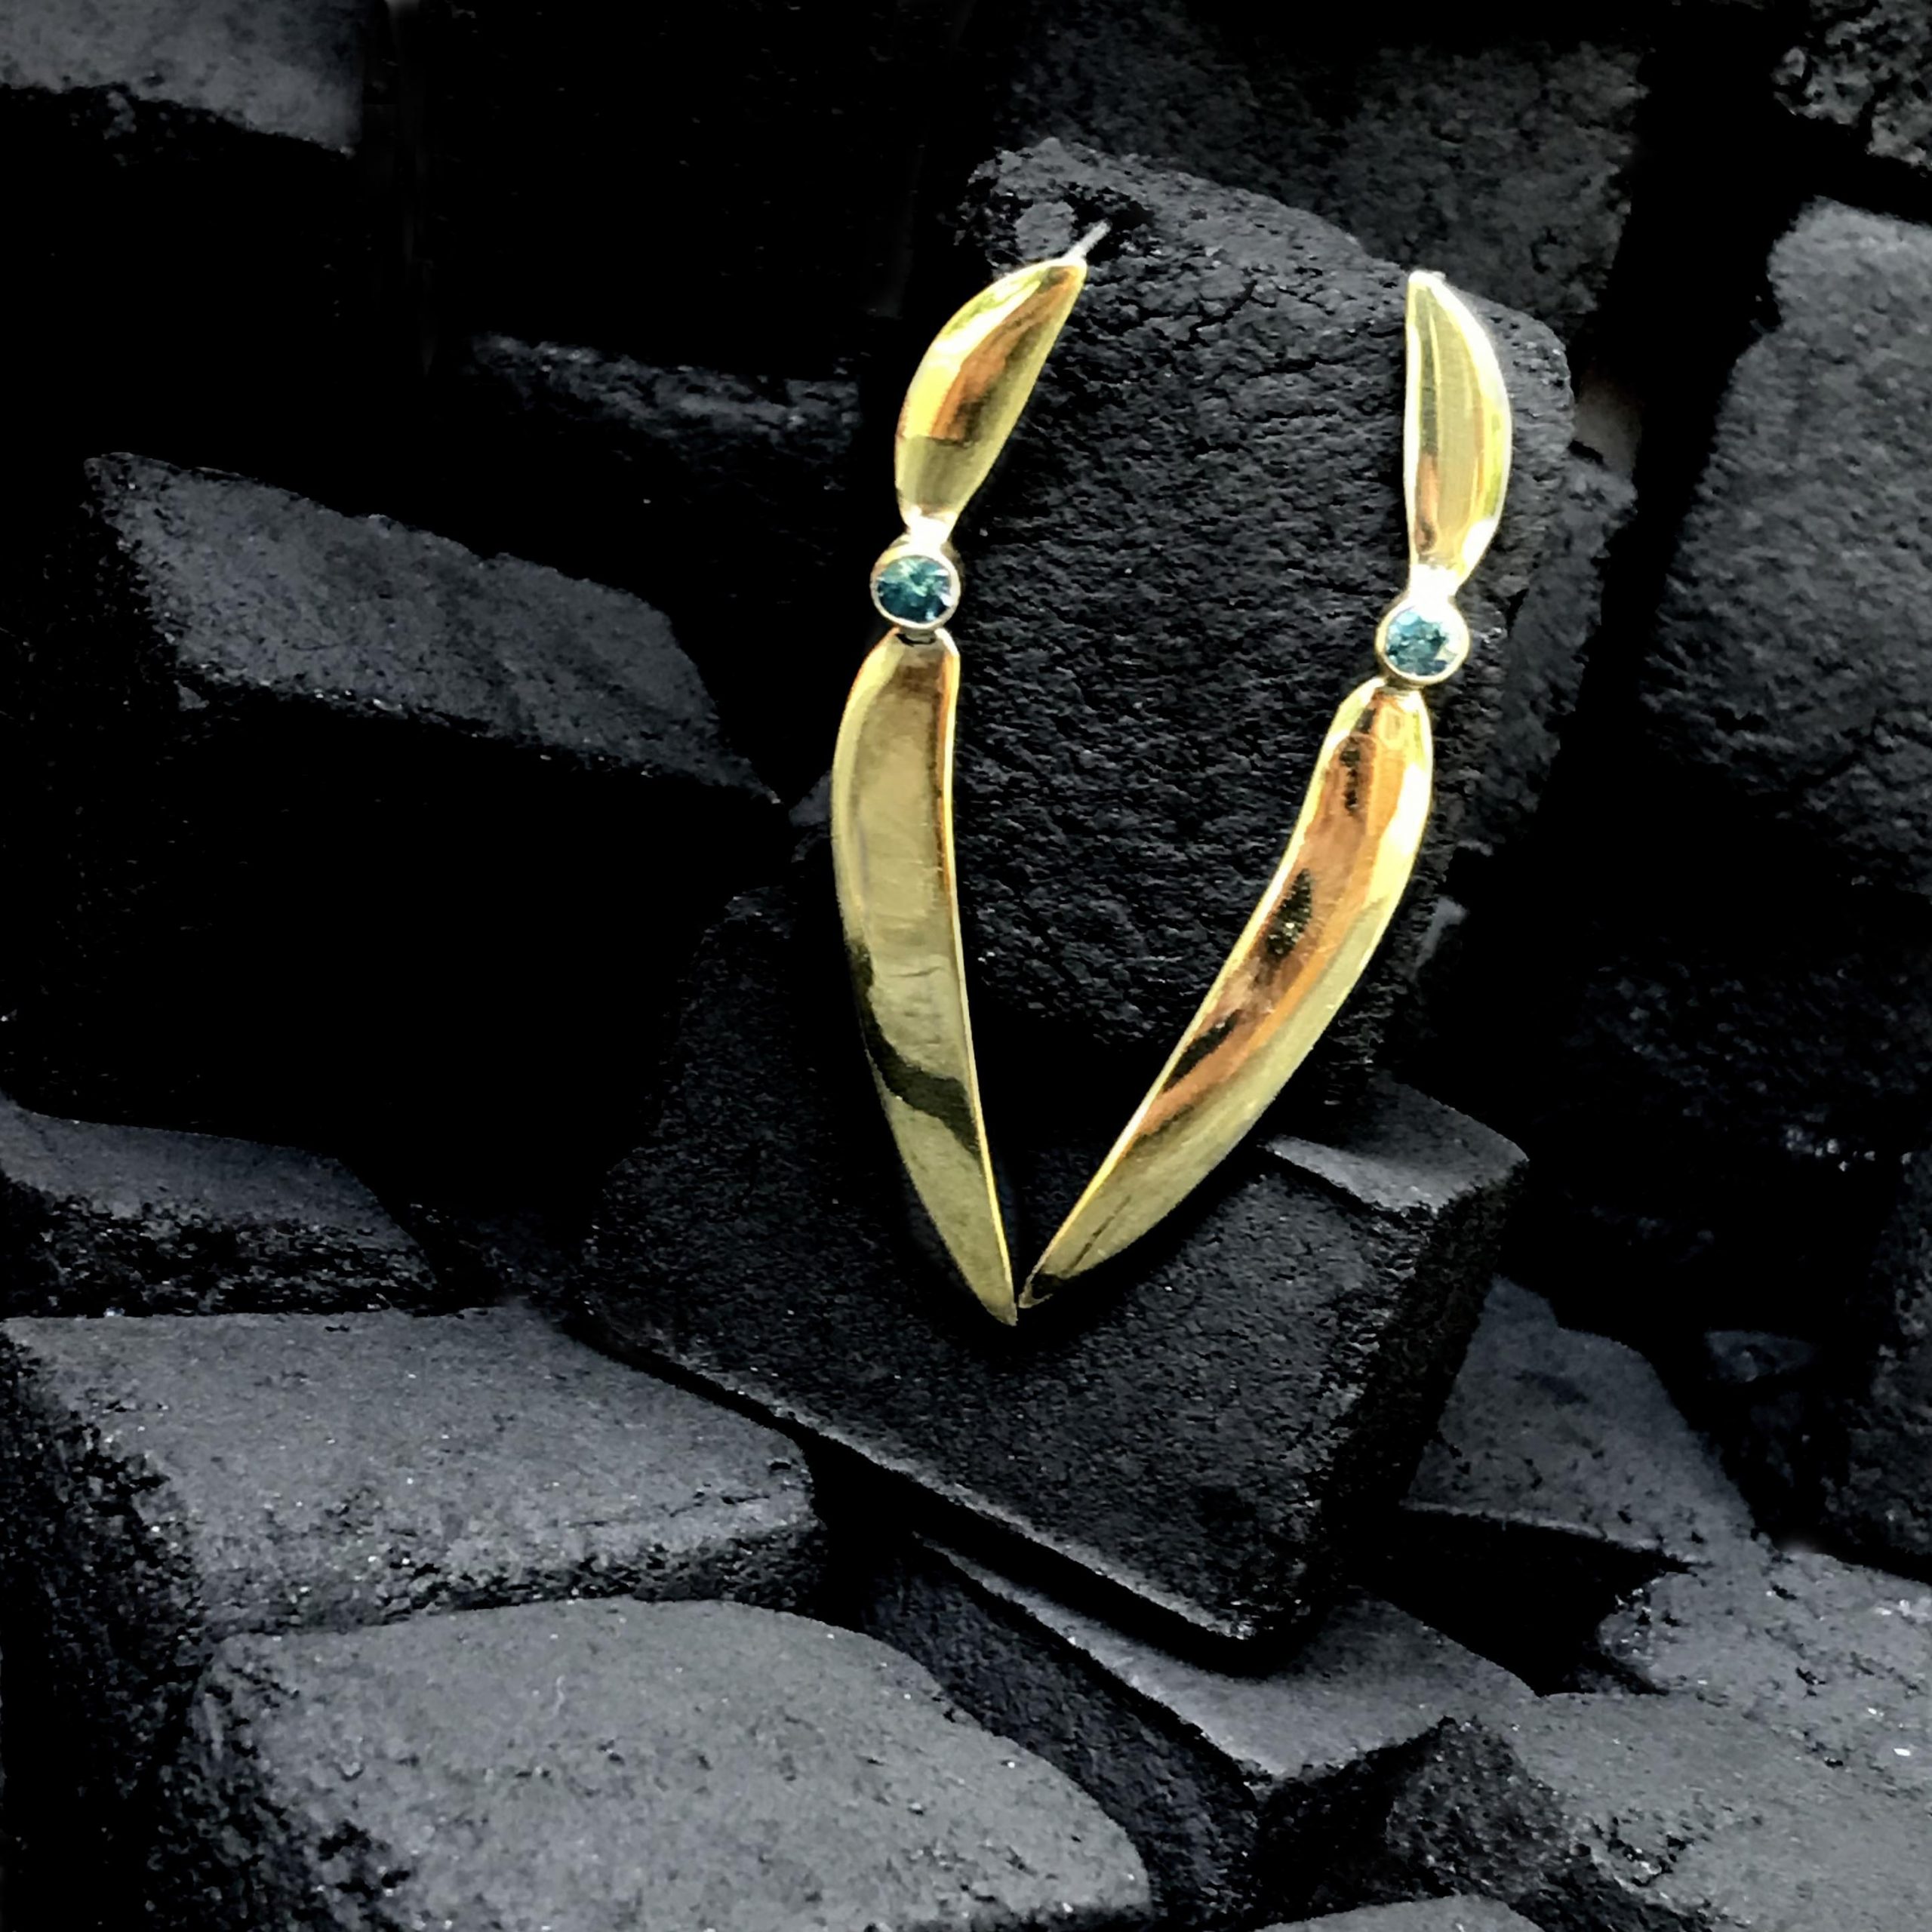 Earrings with zircon stones